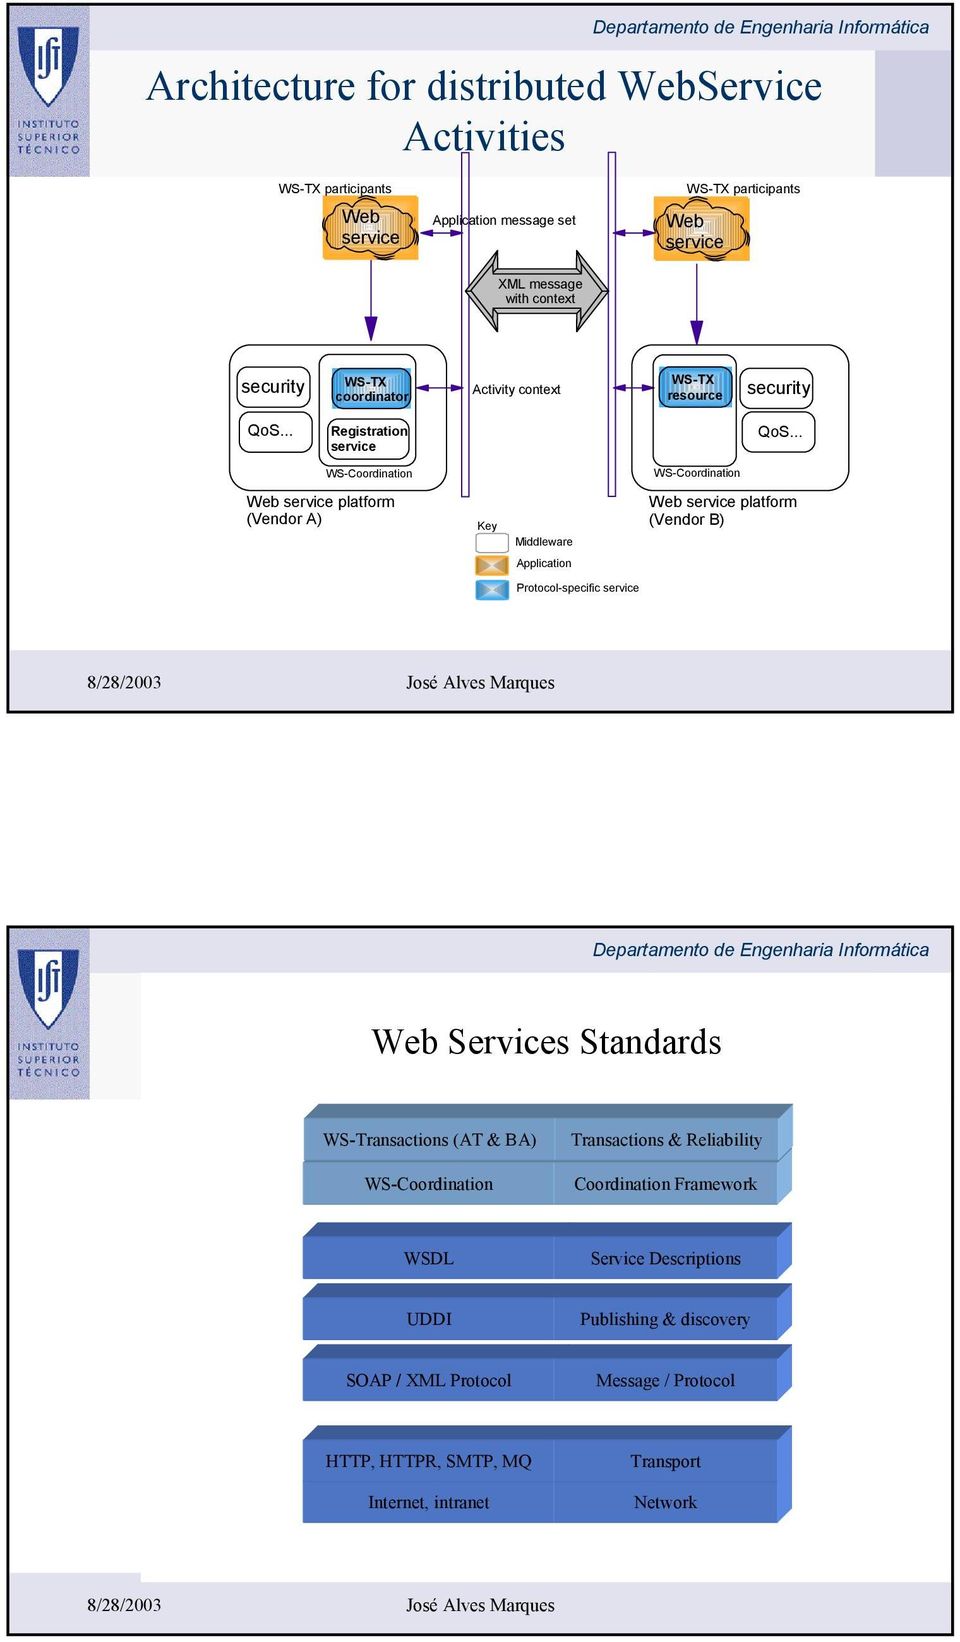 .. WS-Coordination WS-Coordination Web service platform (Vendor A) Key Middleware Web service platform (Vendor B) Application Protocol-specific service Web Services